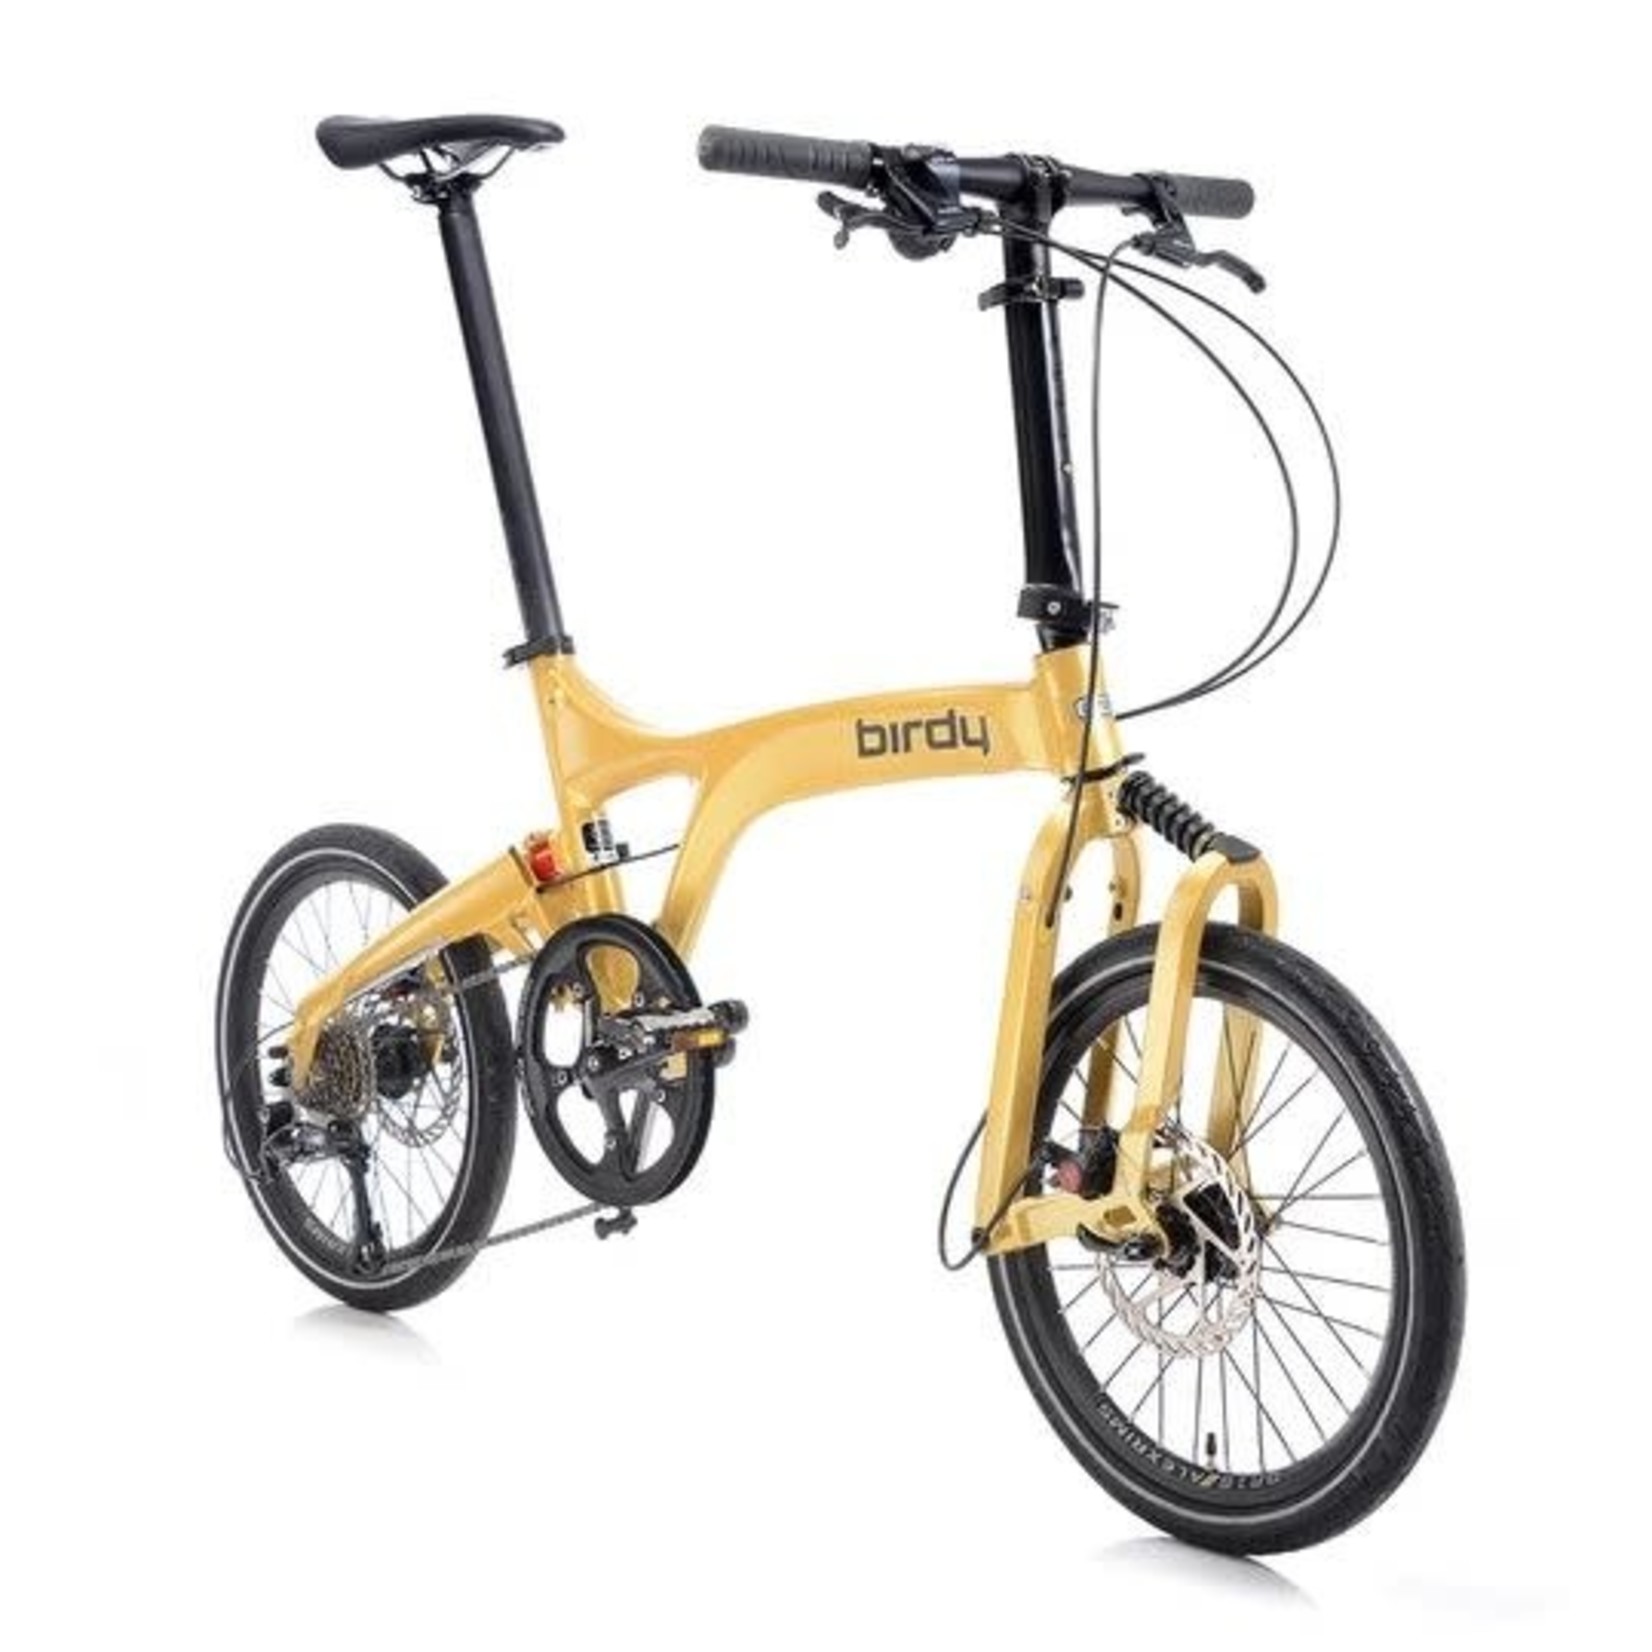 Birdy New Birdy Standard 9 Speed Folding Bike - Metallic Gold